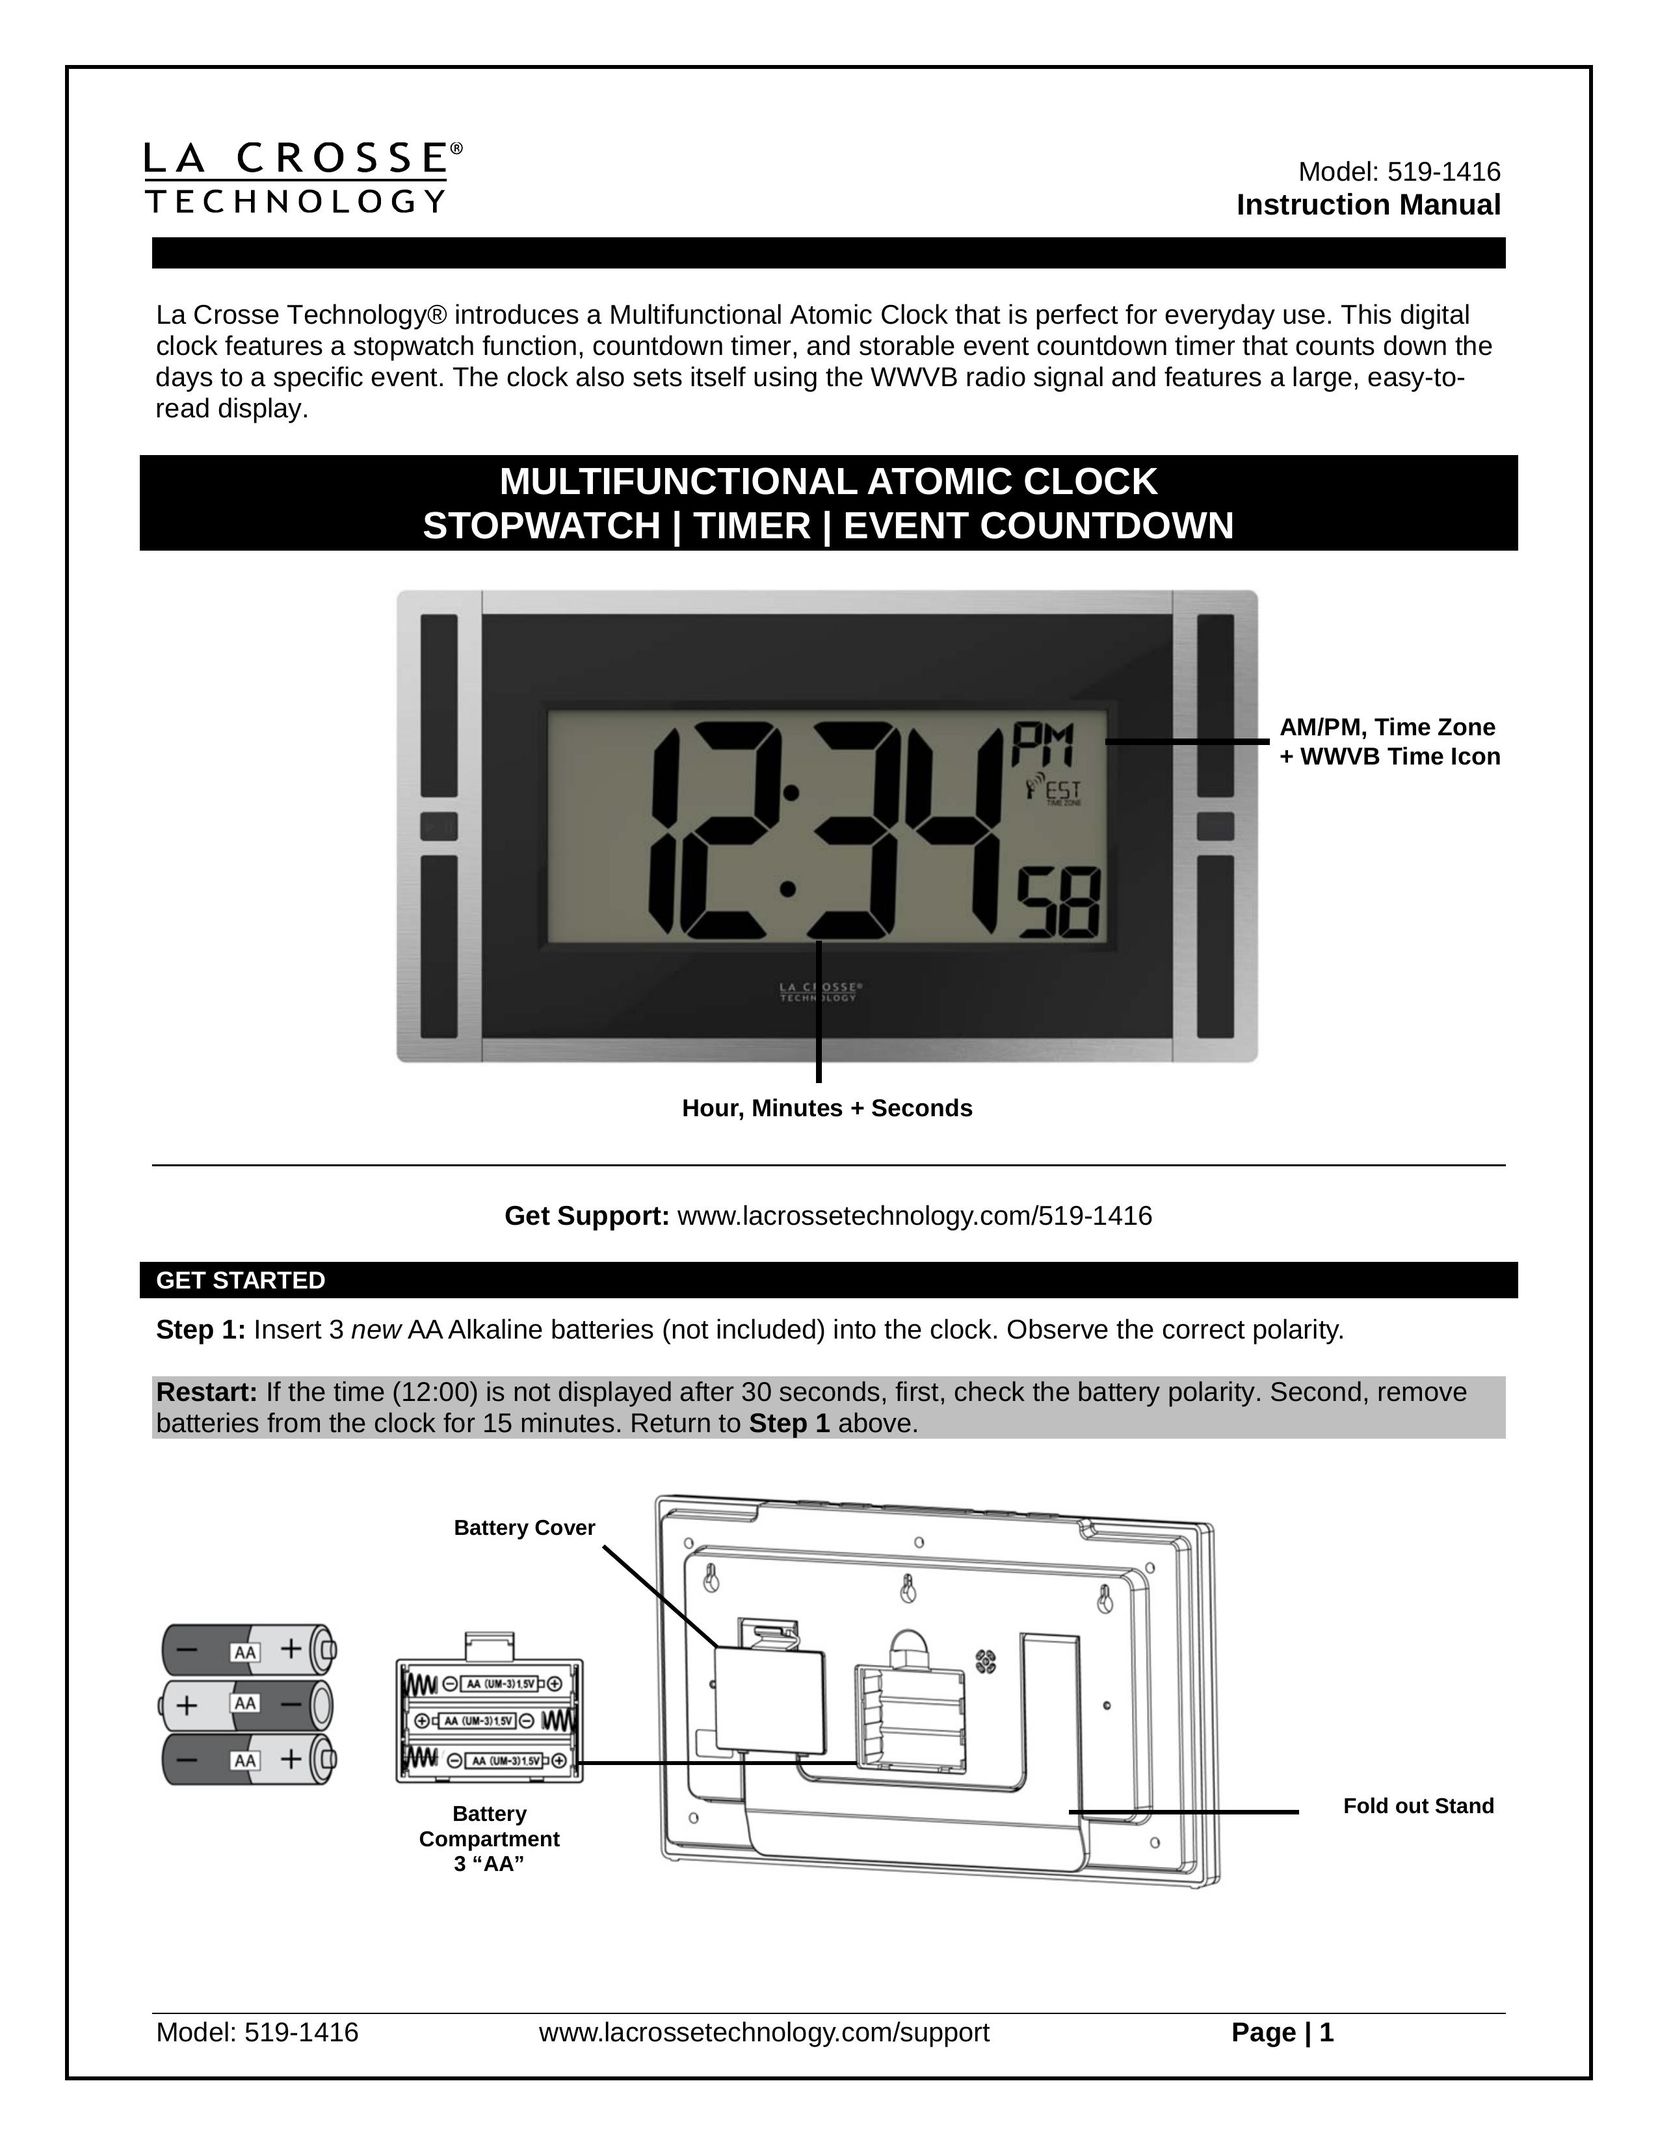 La Crosse Technology 519-1416 Clock User Manual